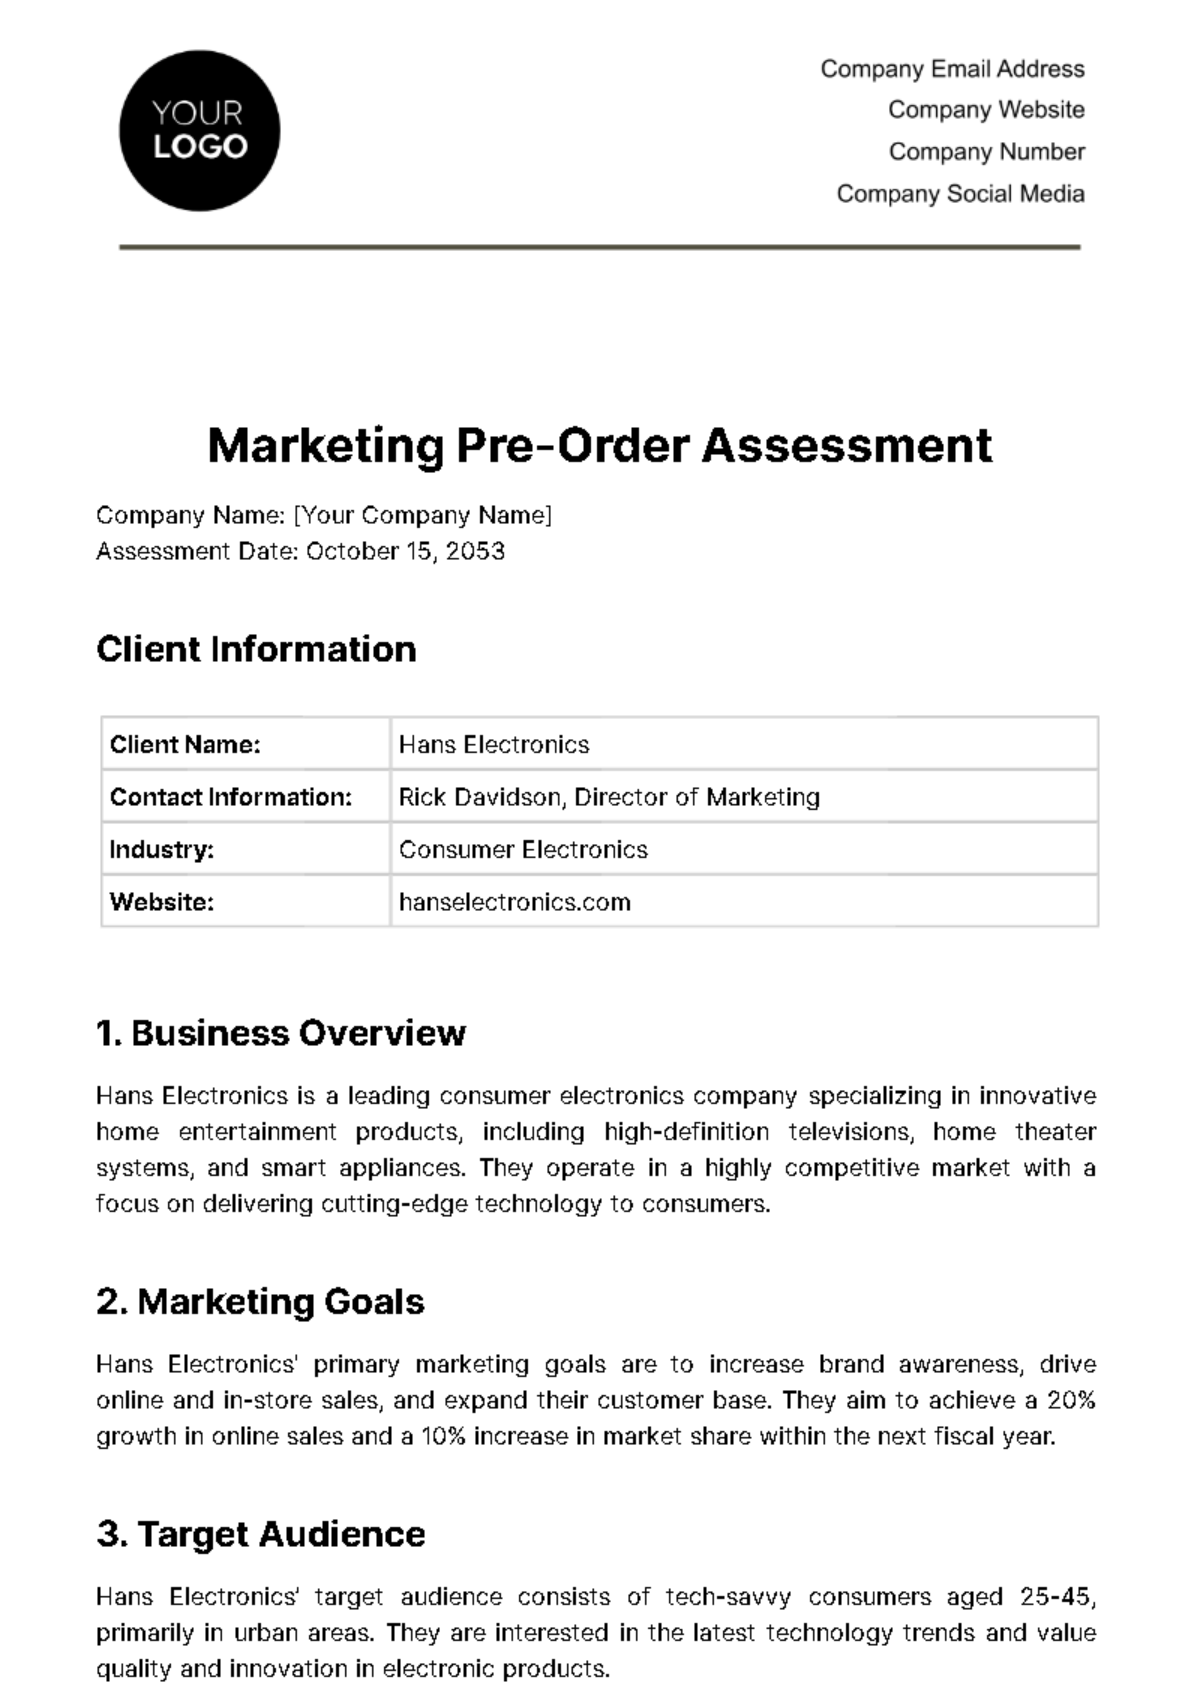 Marketing Pre-Order Assessment Template